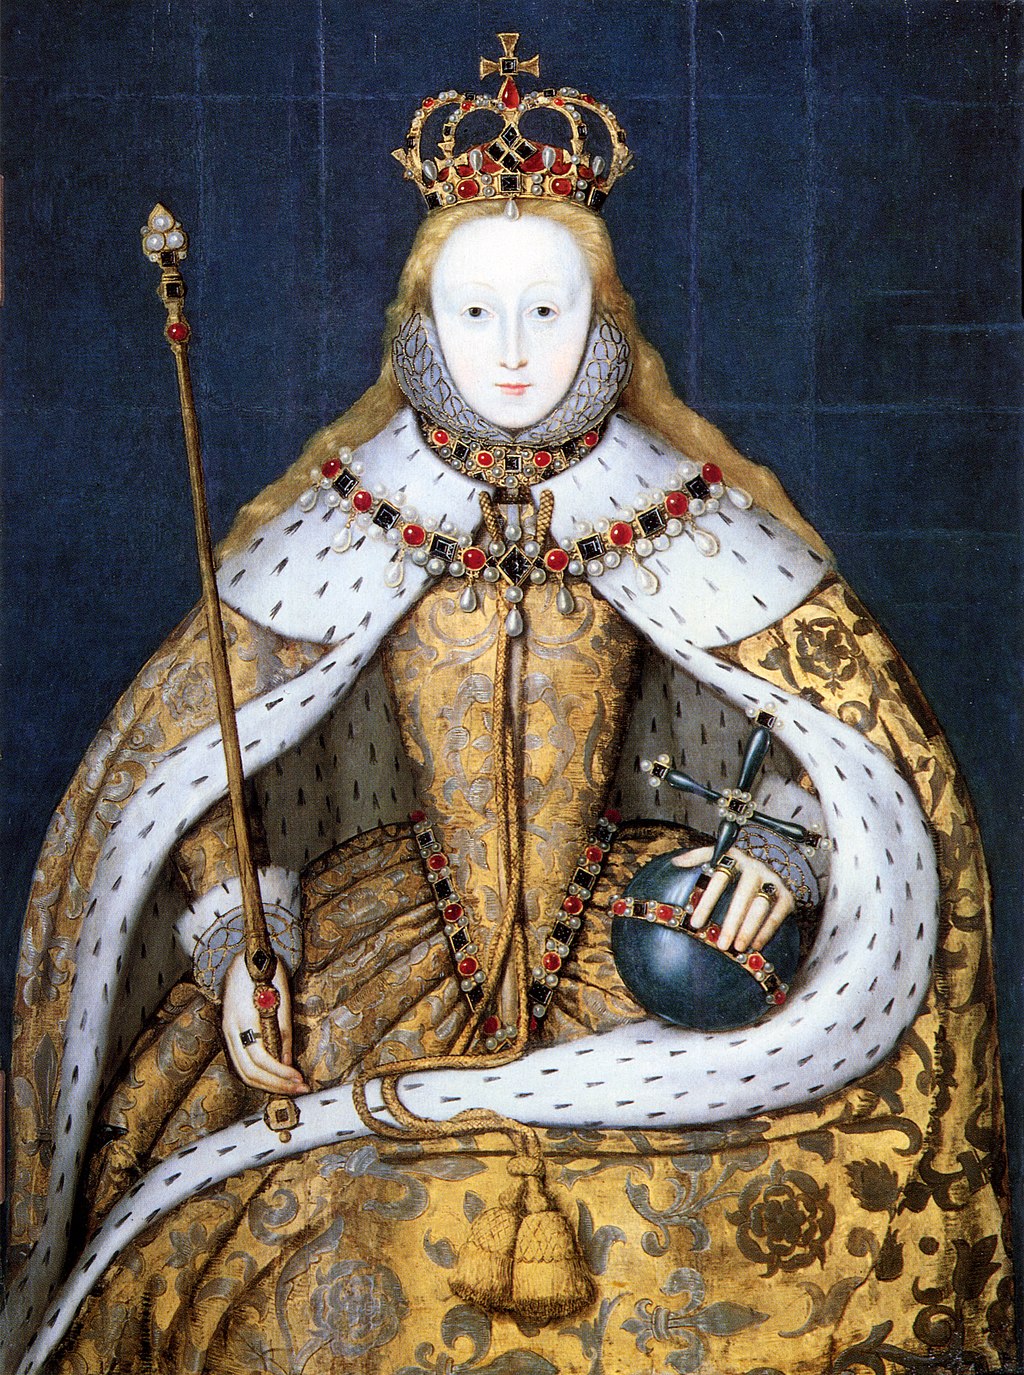 Elizabethan Art: A Powerful Device For Royal Representations